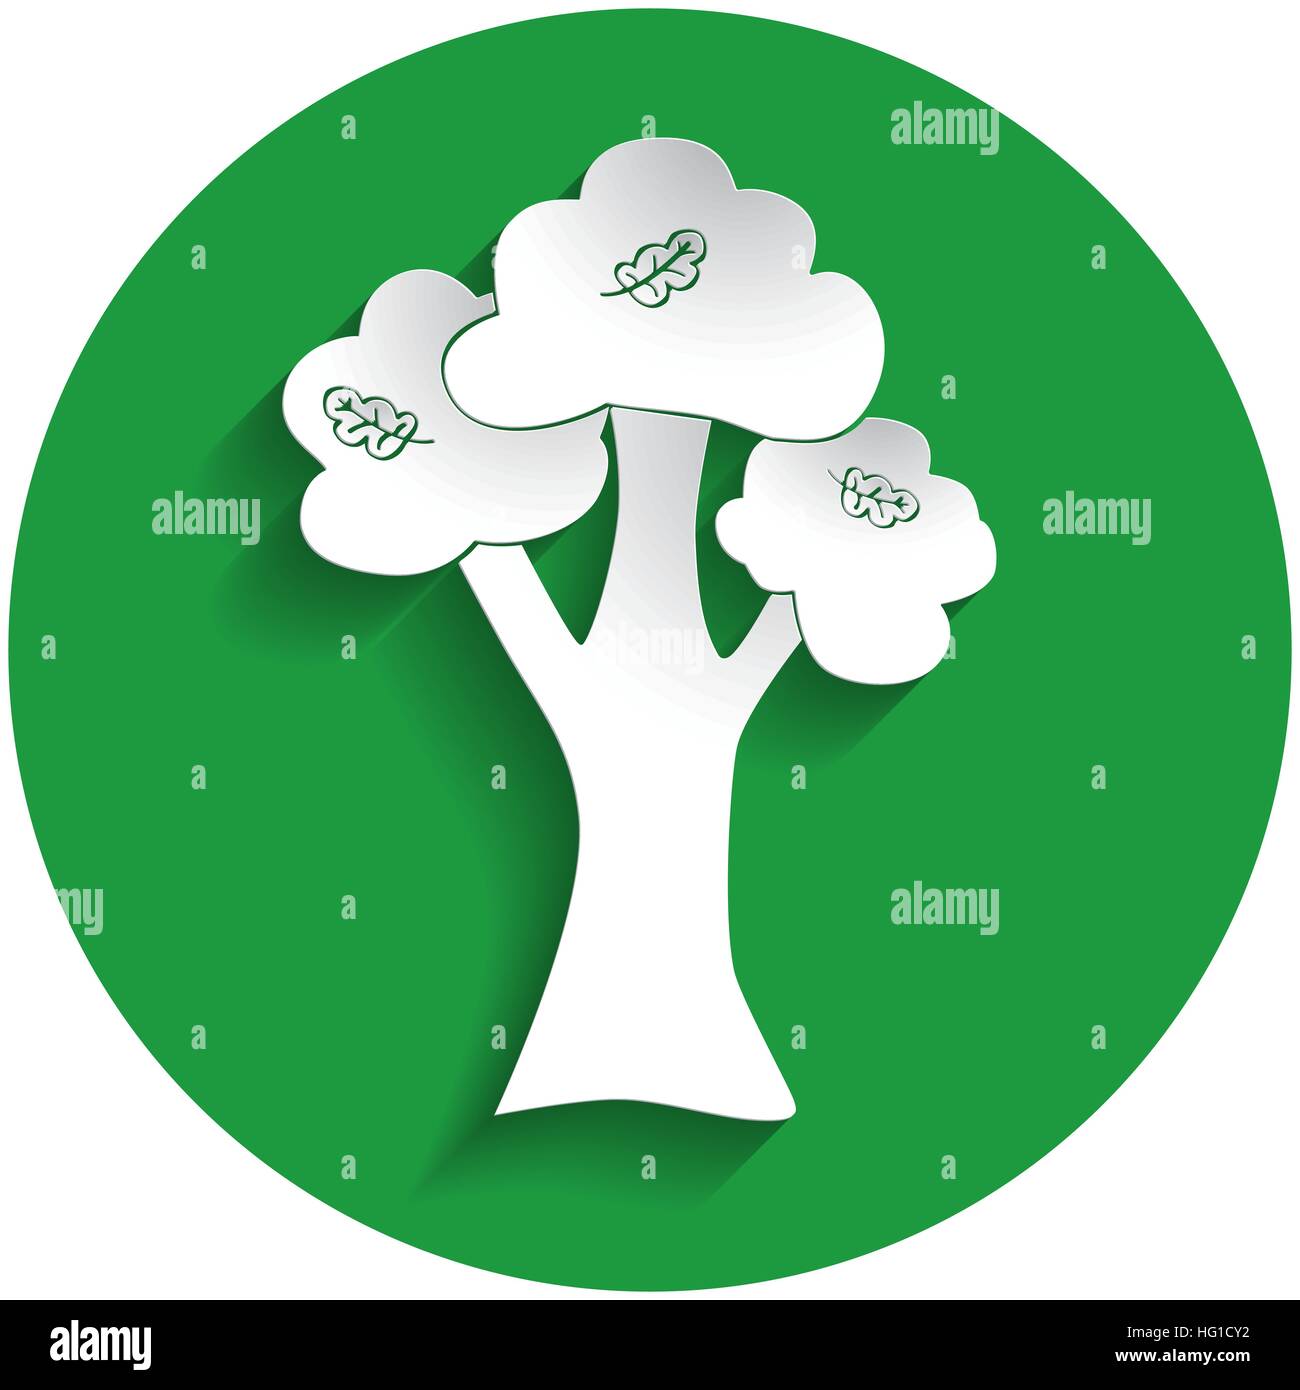 Eiche-Symbol im Papier Stil auf grünen Kreis Stock Vektor